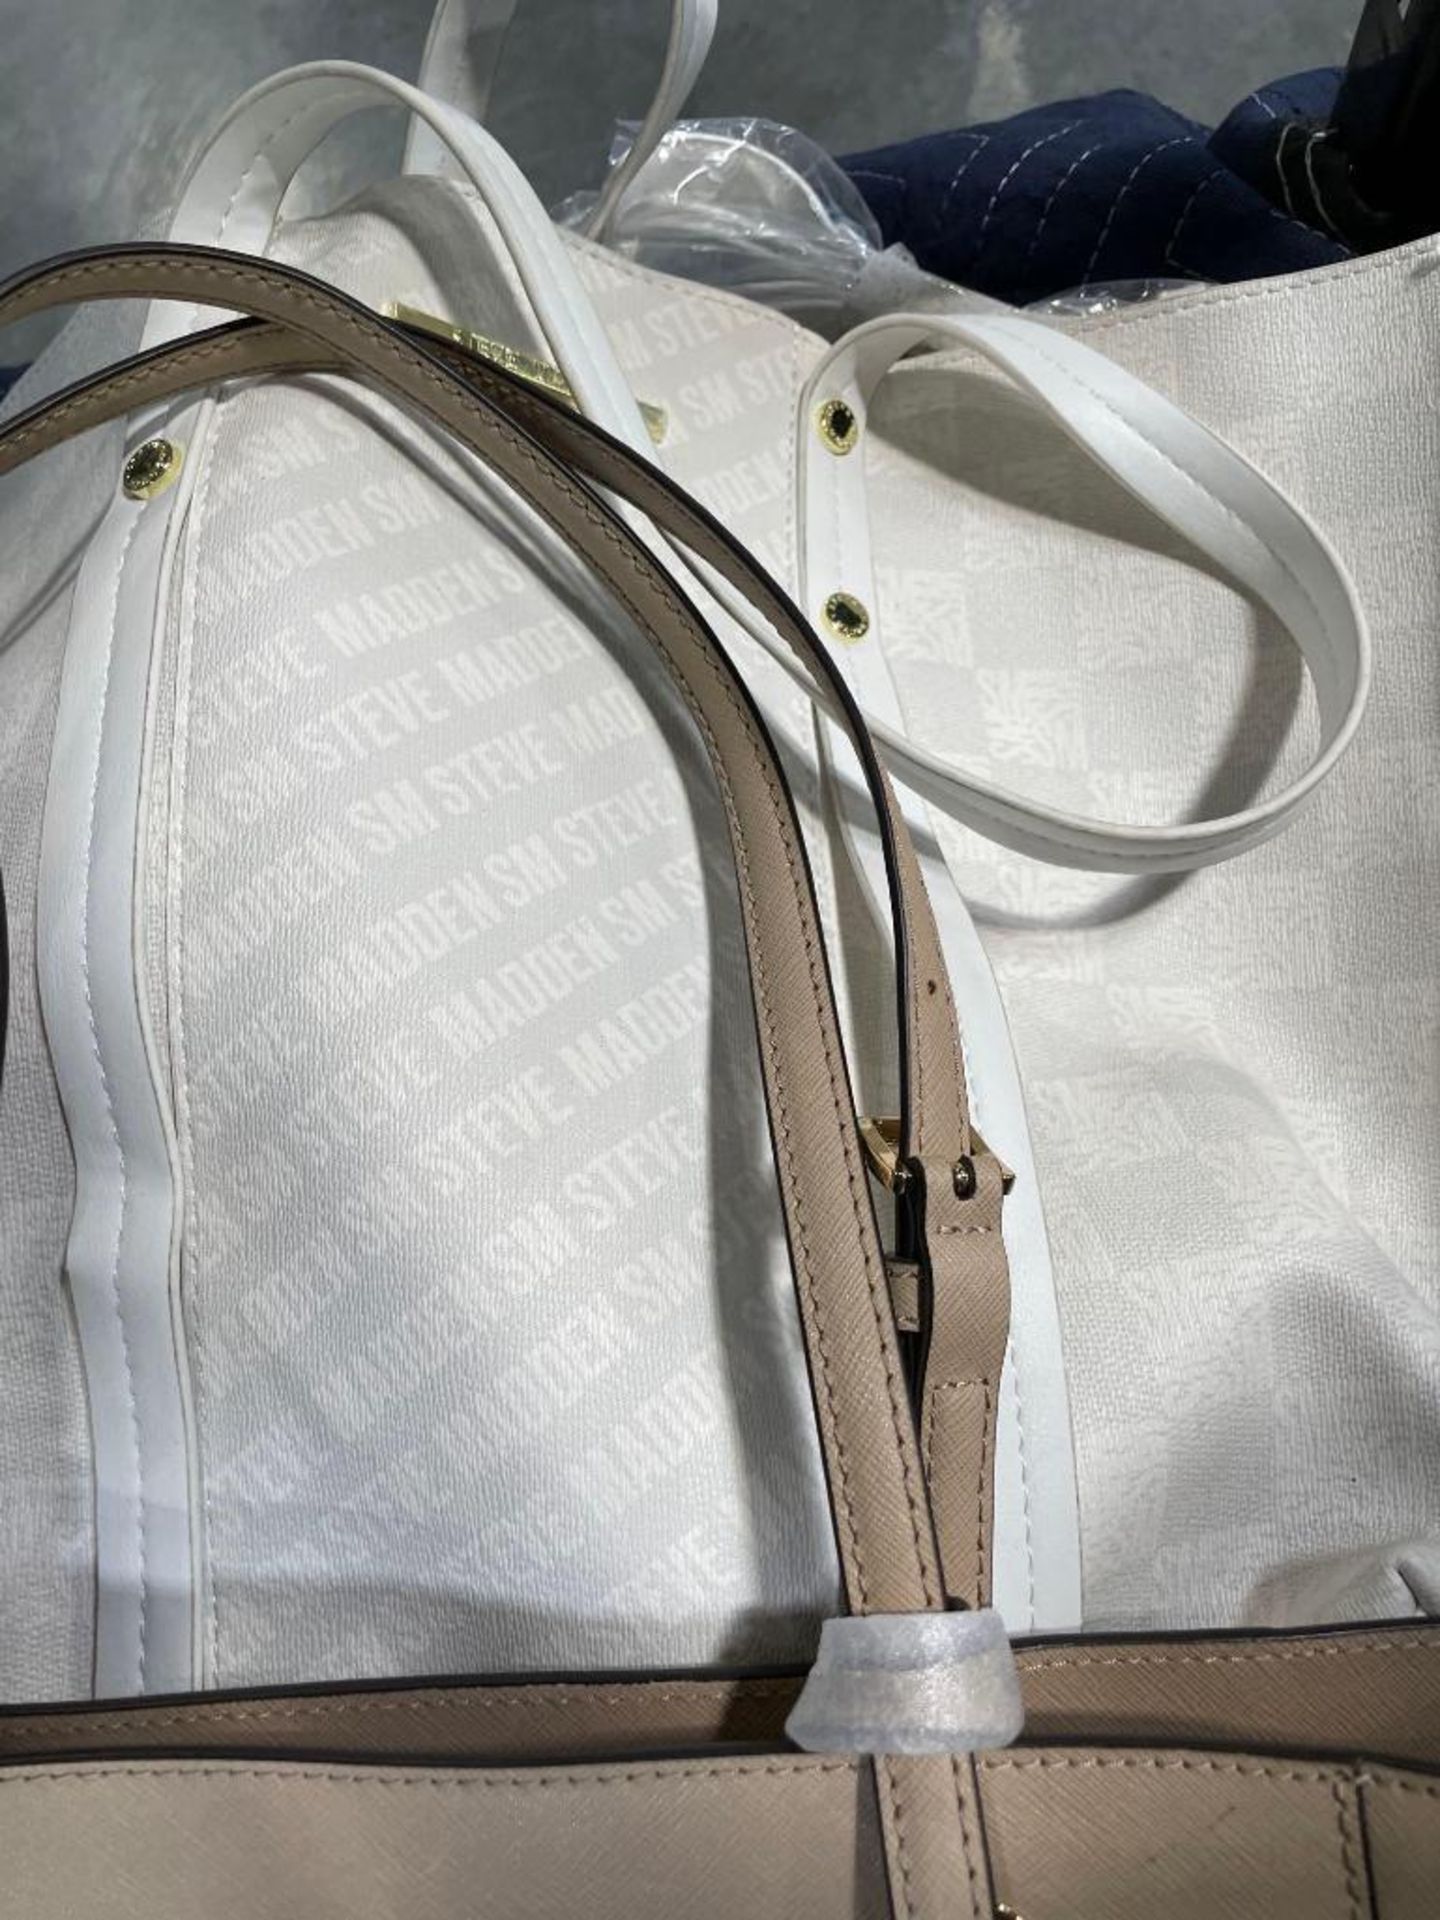 Cologne & hand bags: Nautica, Bourbon, Calvin Klein, Tommy Gril, Michael Kors, Steve Madden - Image 4 of 8